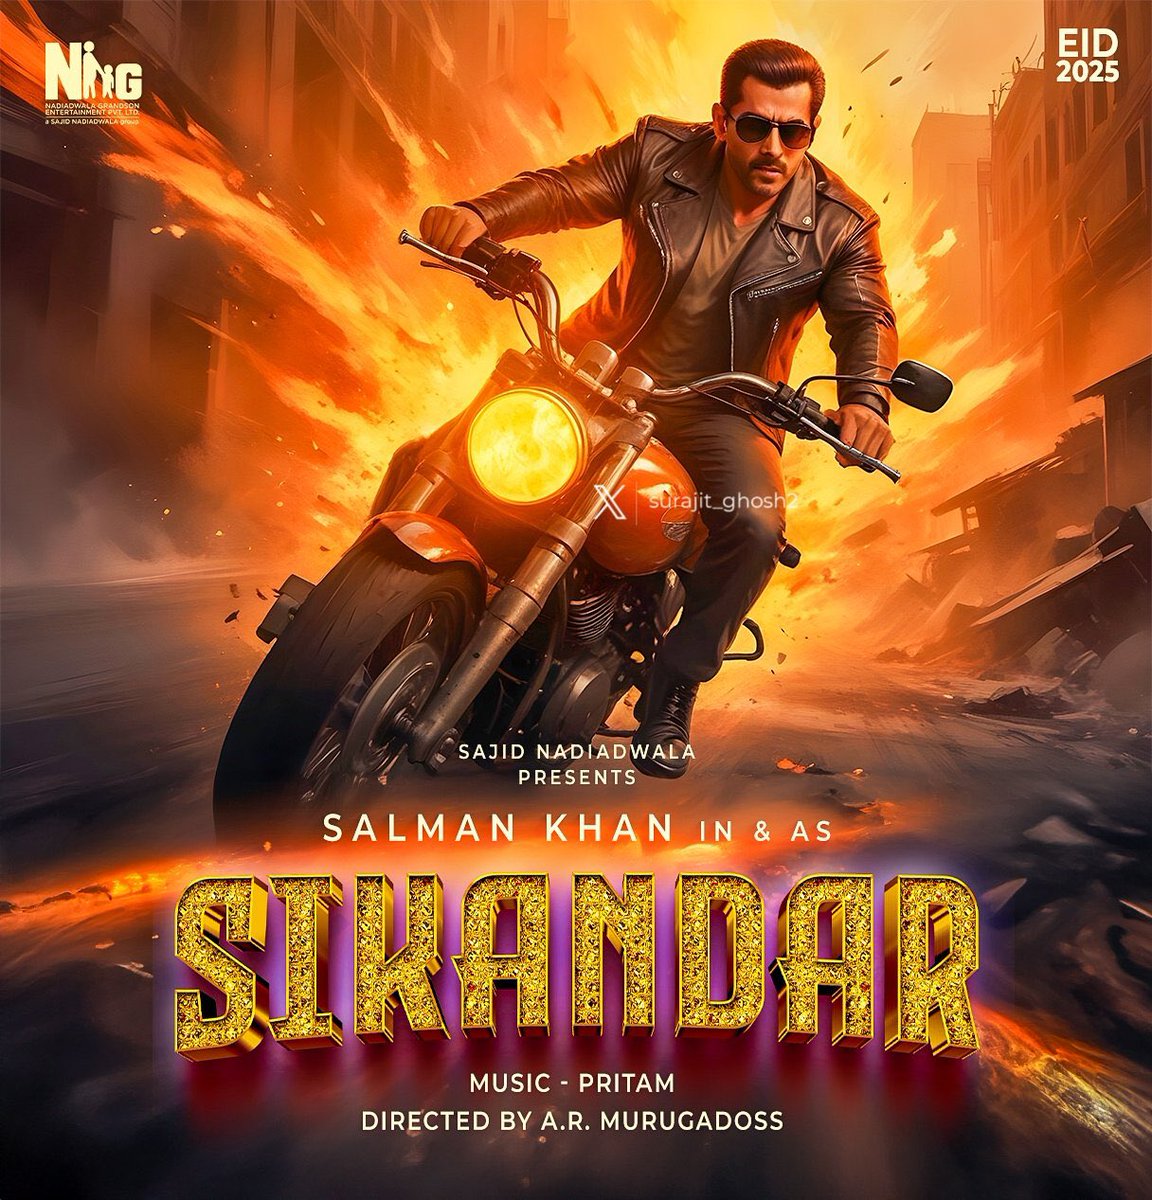 This fan made poster of Megastar #SalmanKhan’s #Sikandar is 🔥 #RashmikaMandanna Design by @surajit_ghosh2